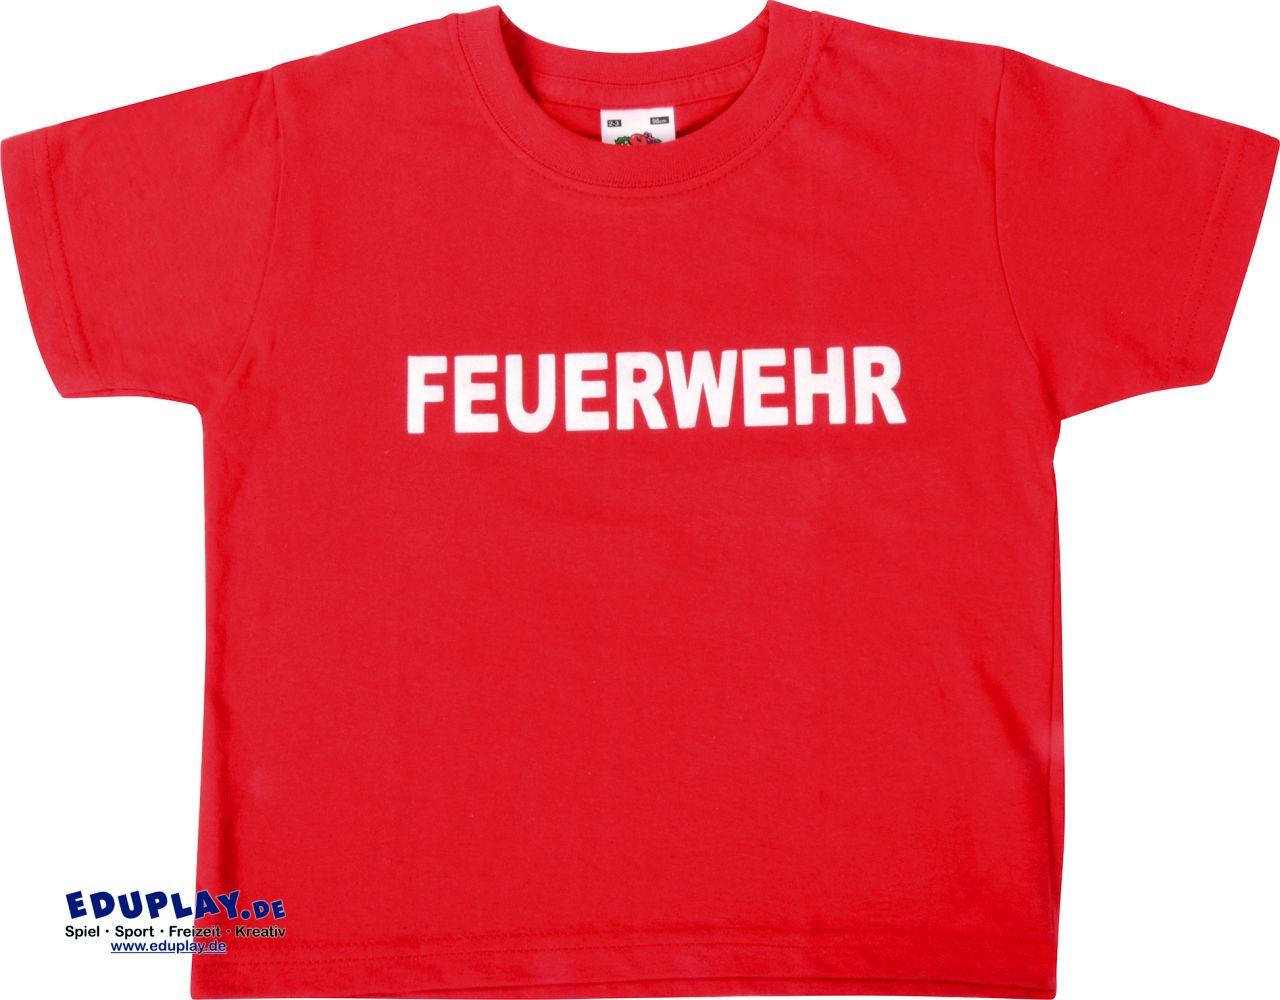 Eduplay T-Shirt Feuerwehr Rot, Gr. 140